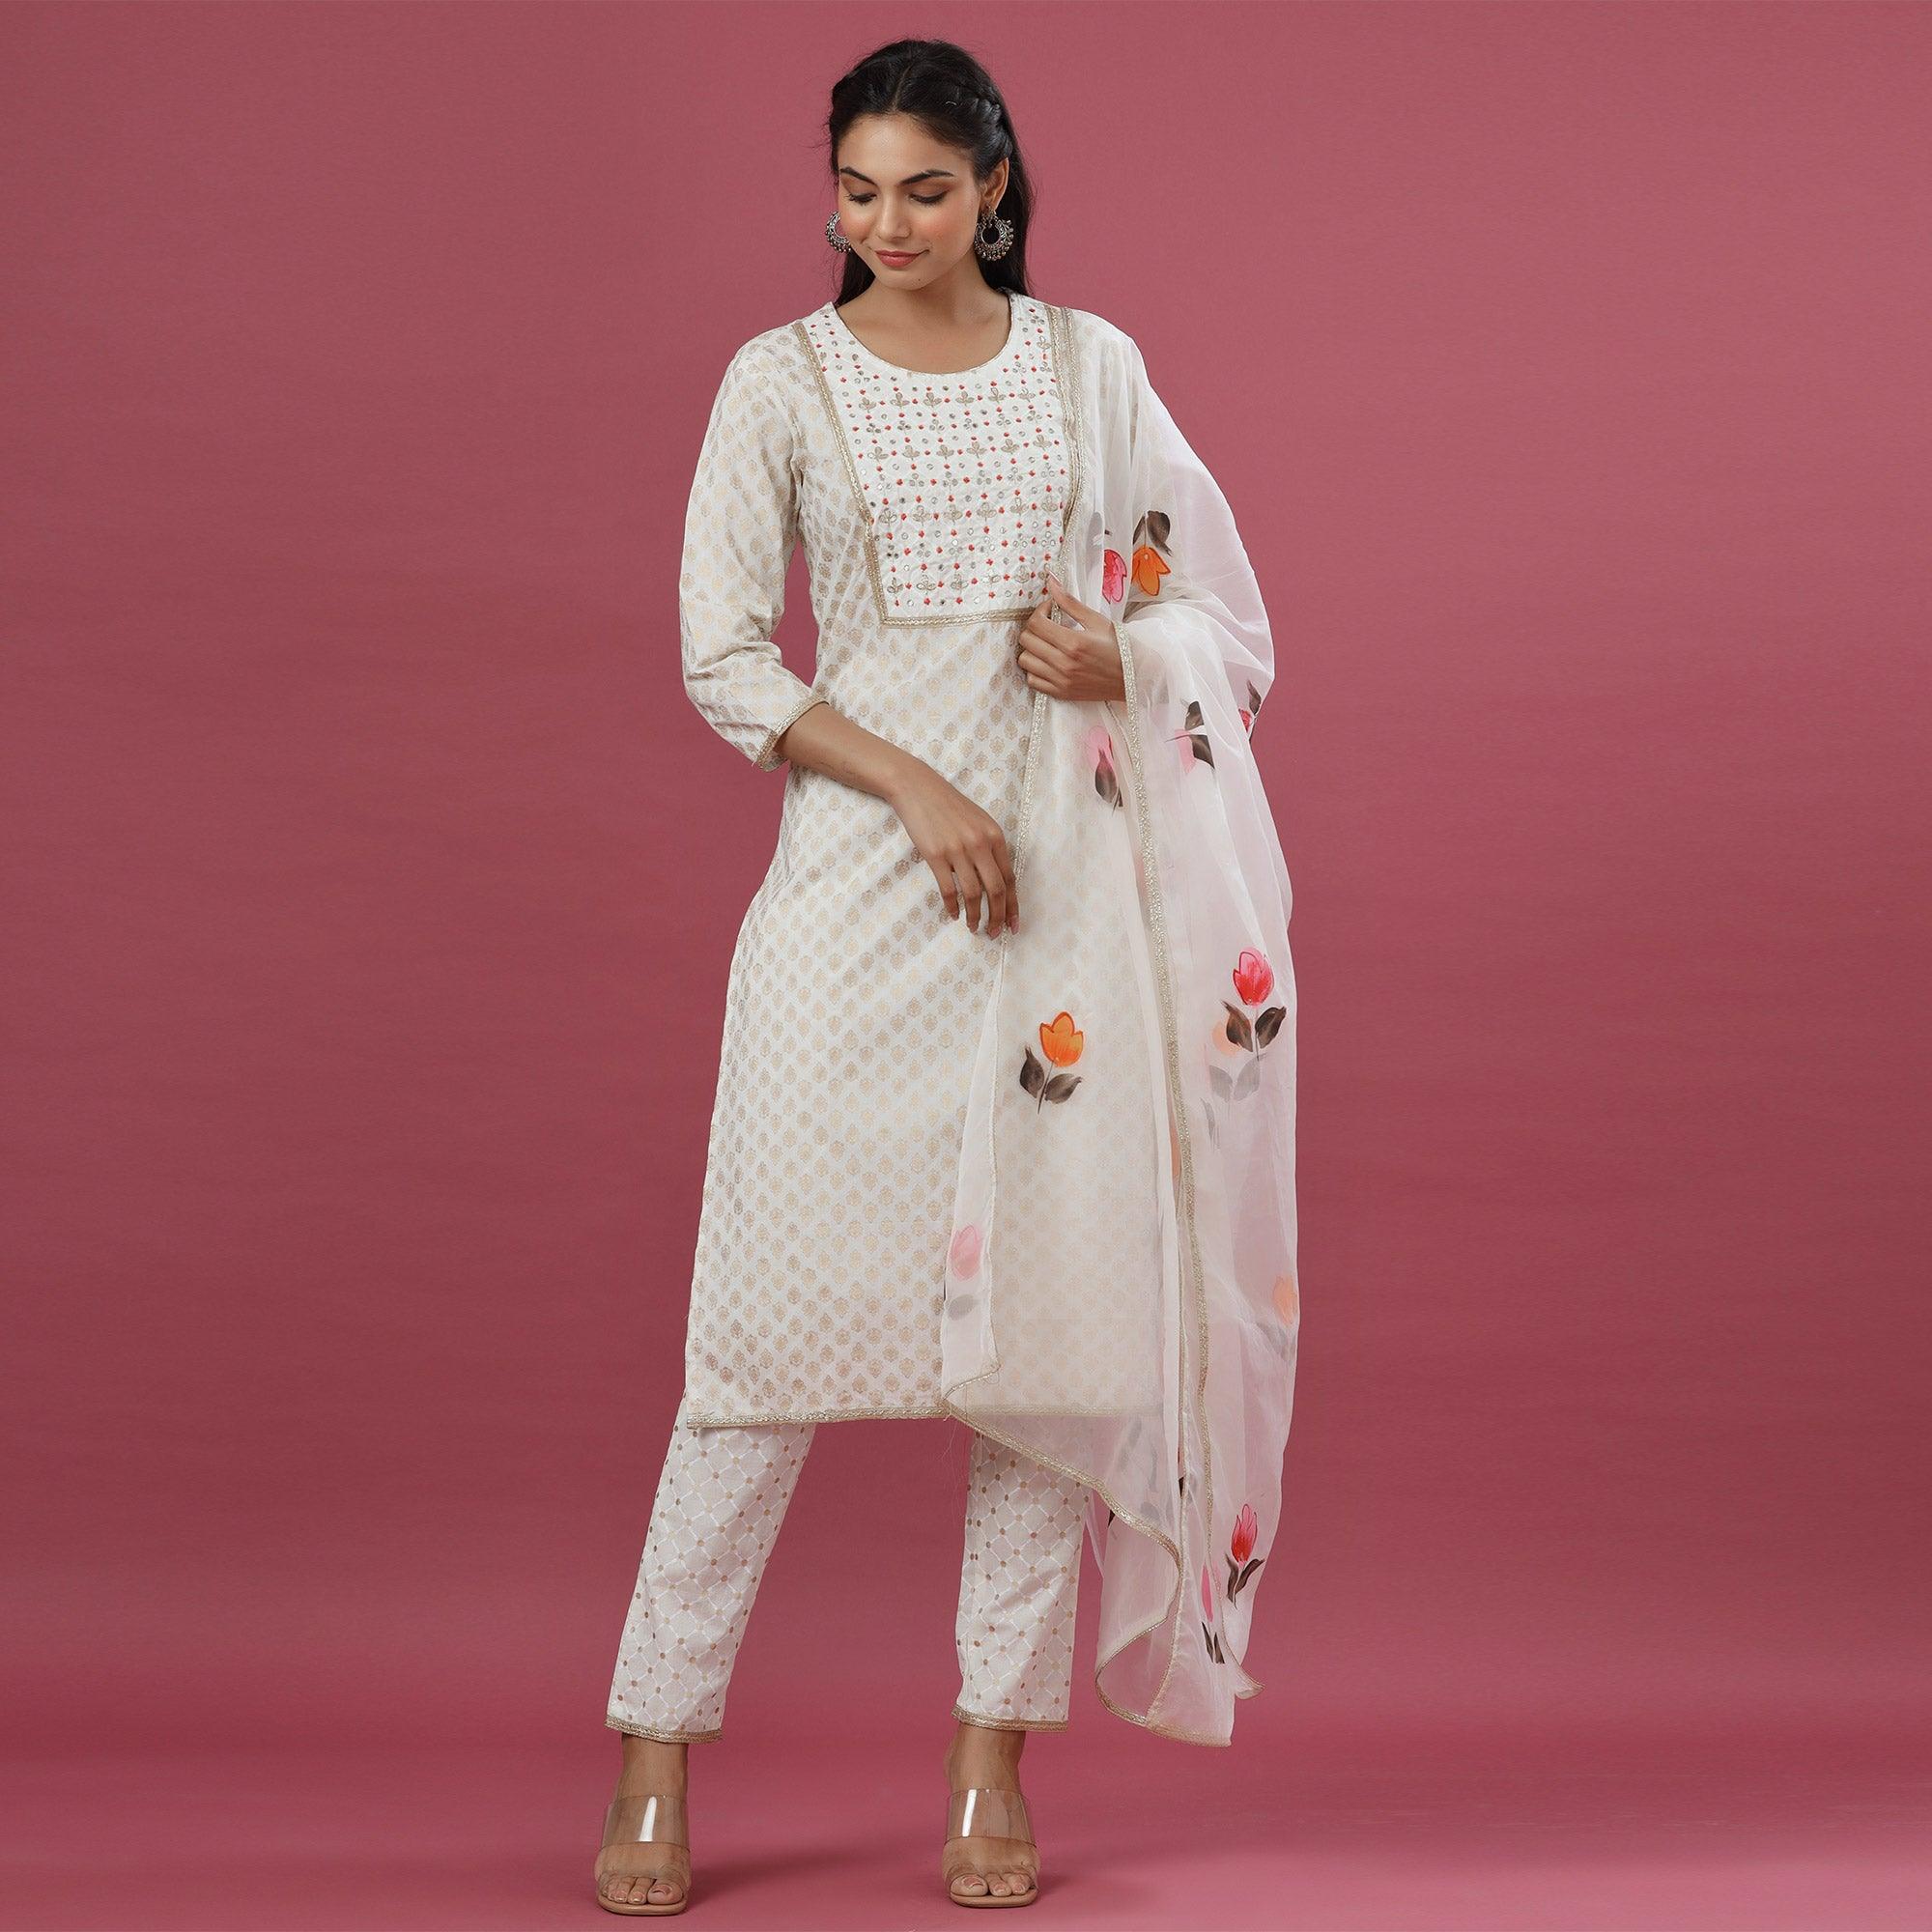 Yellow And White Cotton Kurta Suit Set, Kurti With Pants, कुरती पैंट सेट -  Hari Om Gas Agency, Jaipur | ID: 26393501297